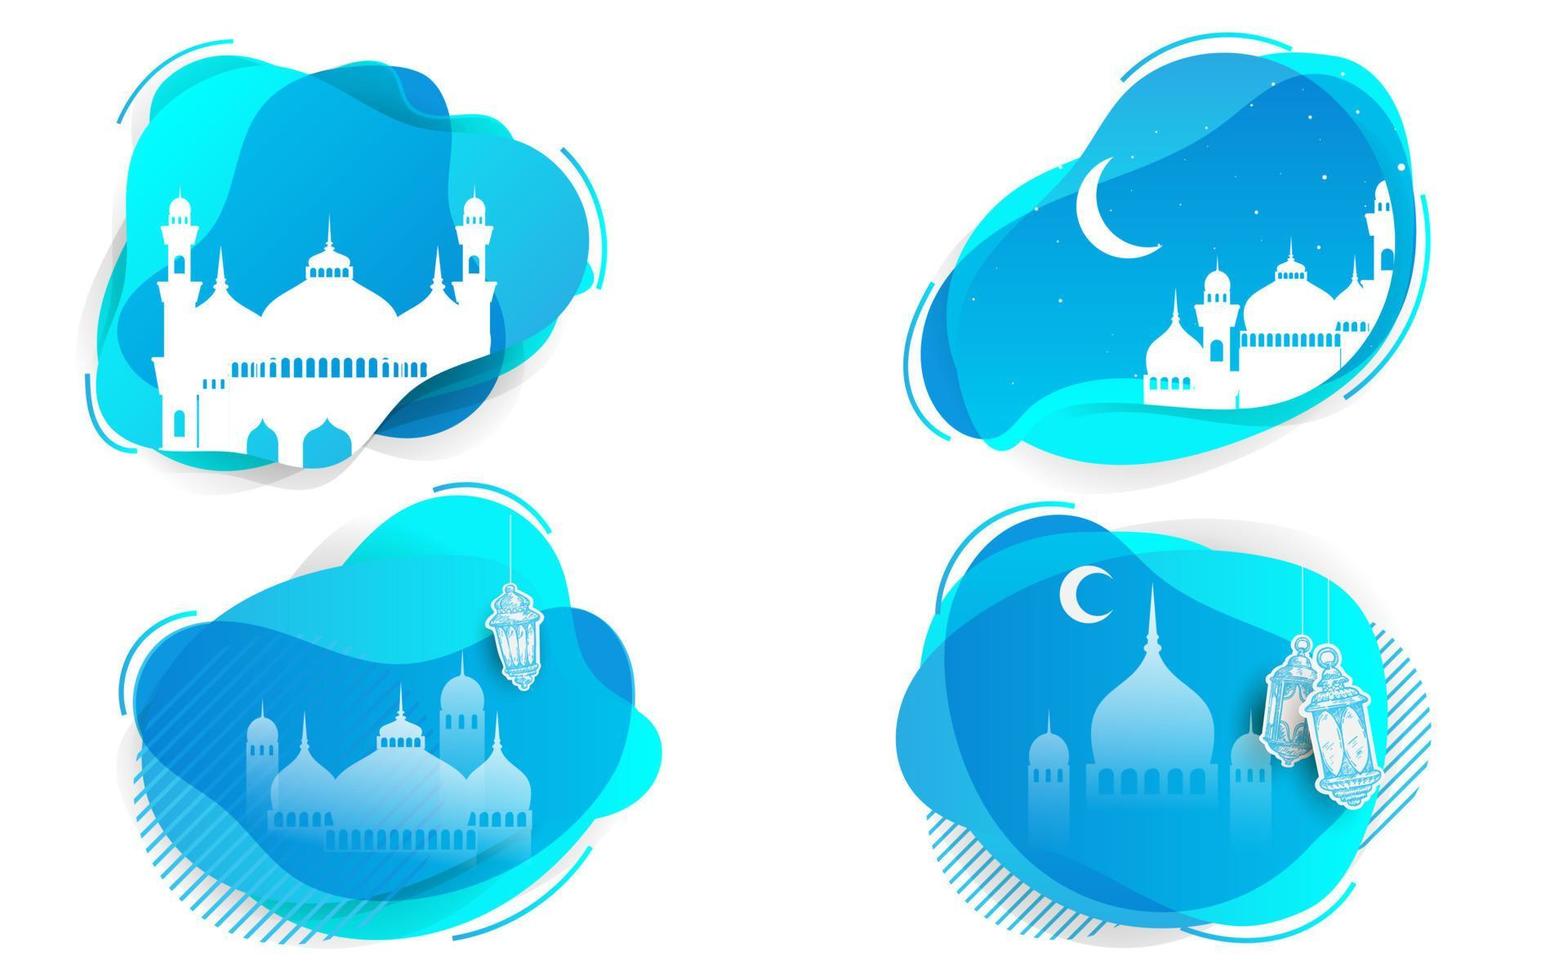 moské design på vit bakgrund. ramadan design vektor